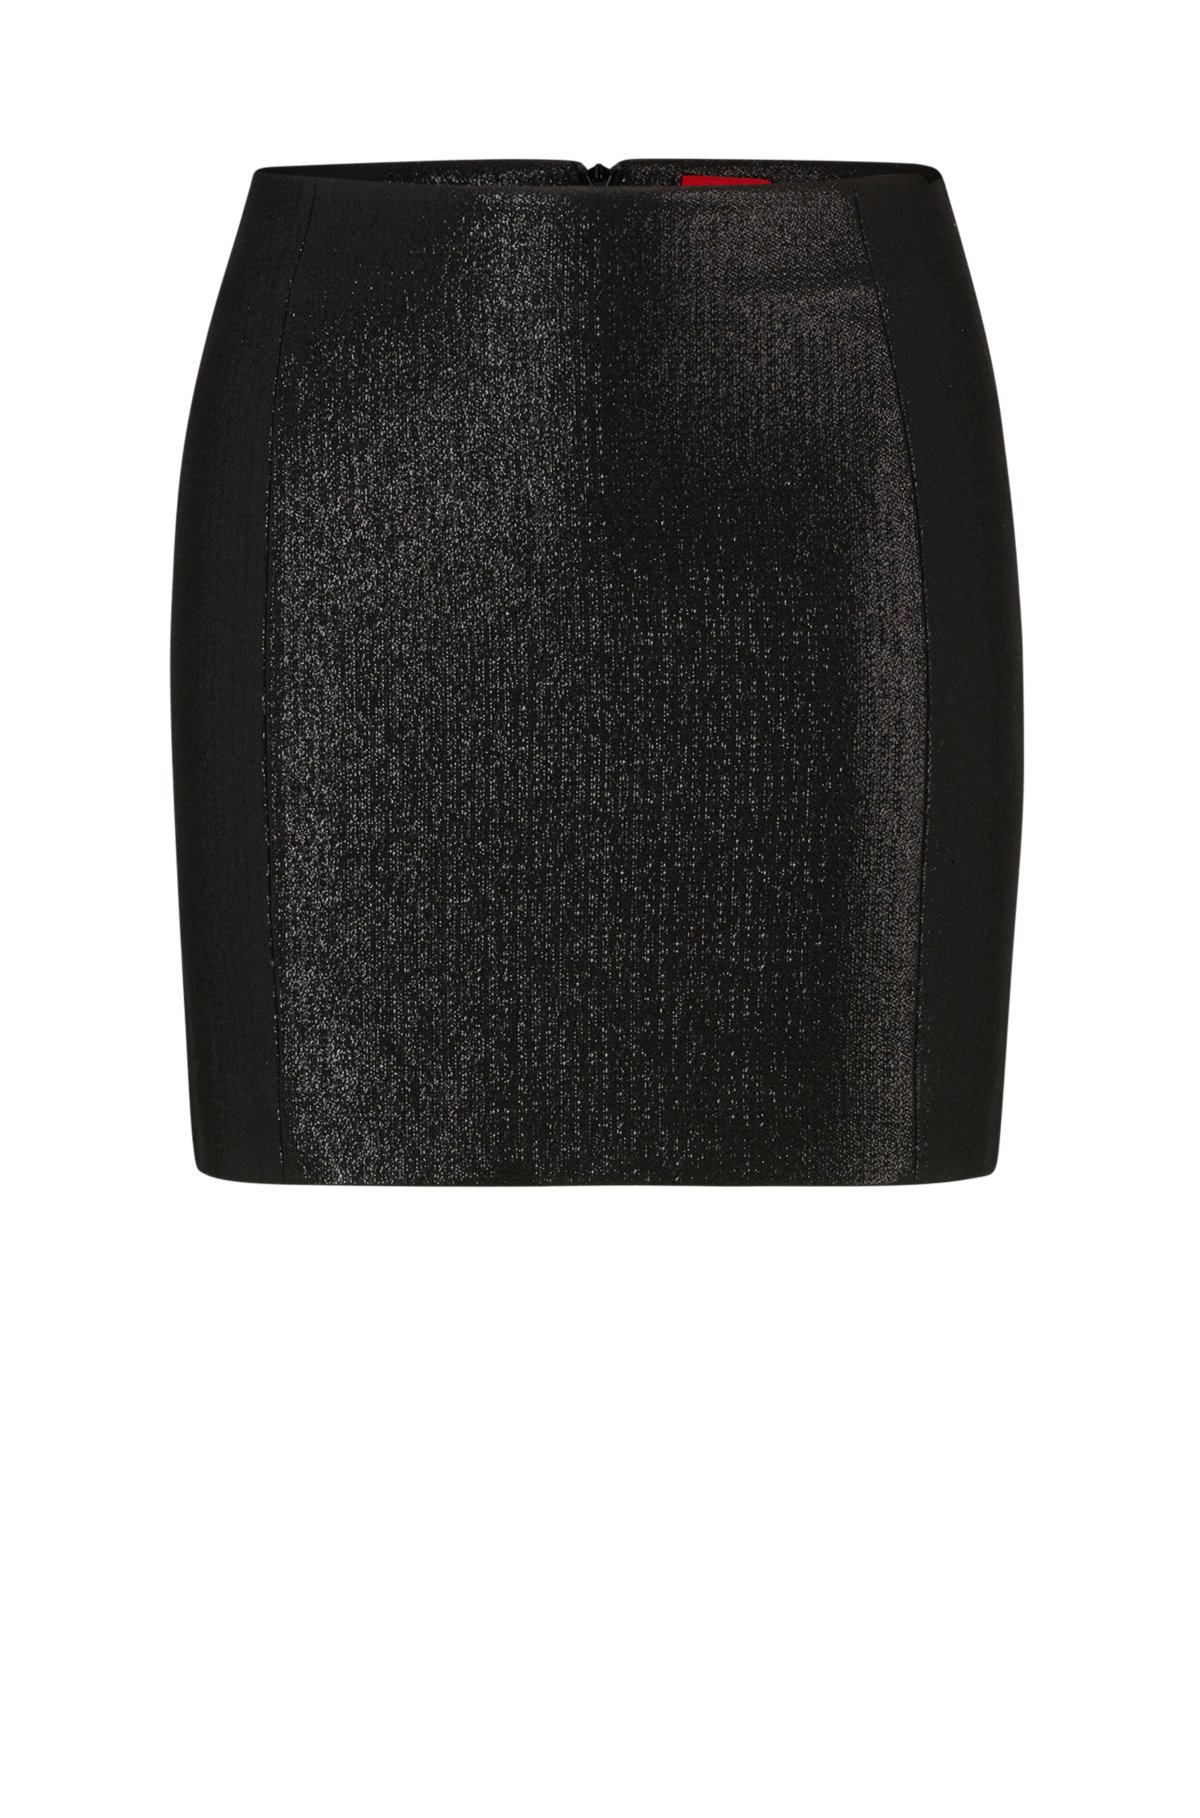 Low-waisted mini skirt in metallic fabric, black